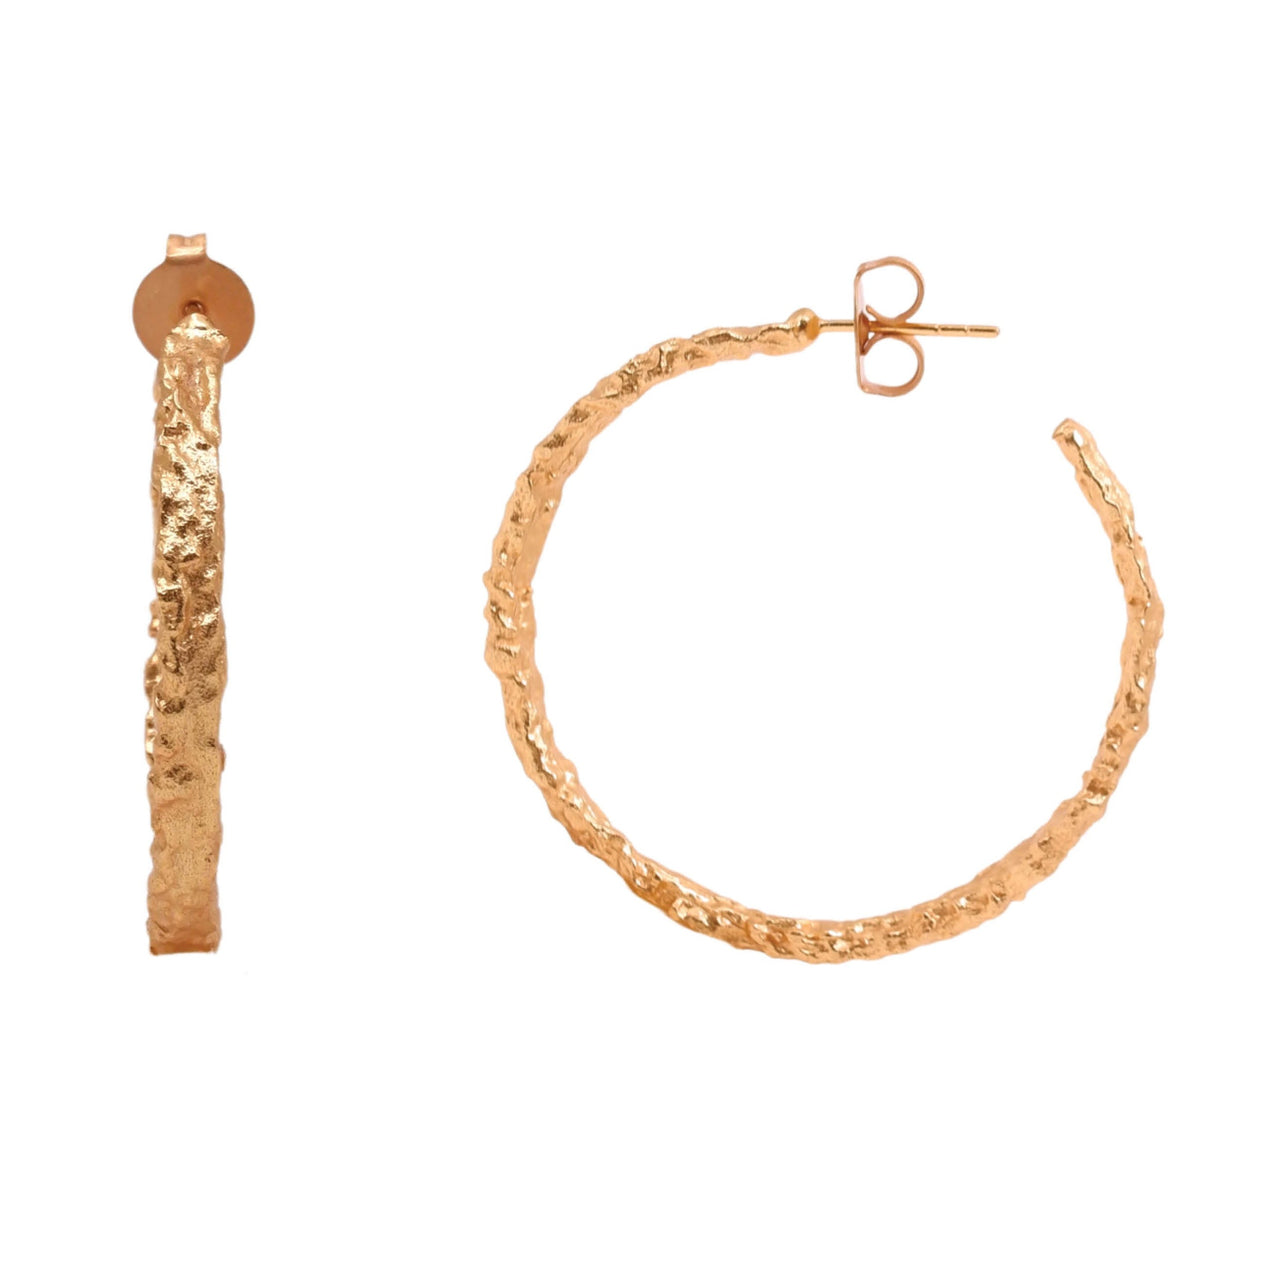 Gold hoop earrings - 18kt gold plated